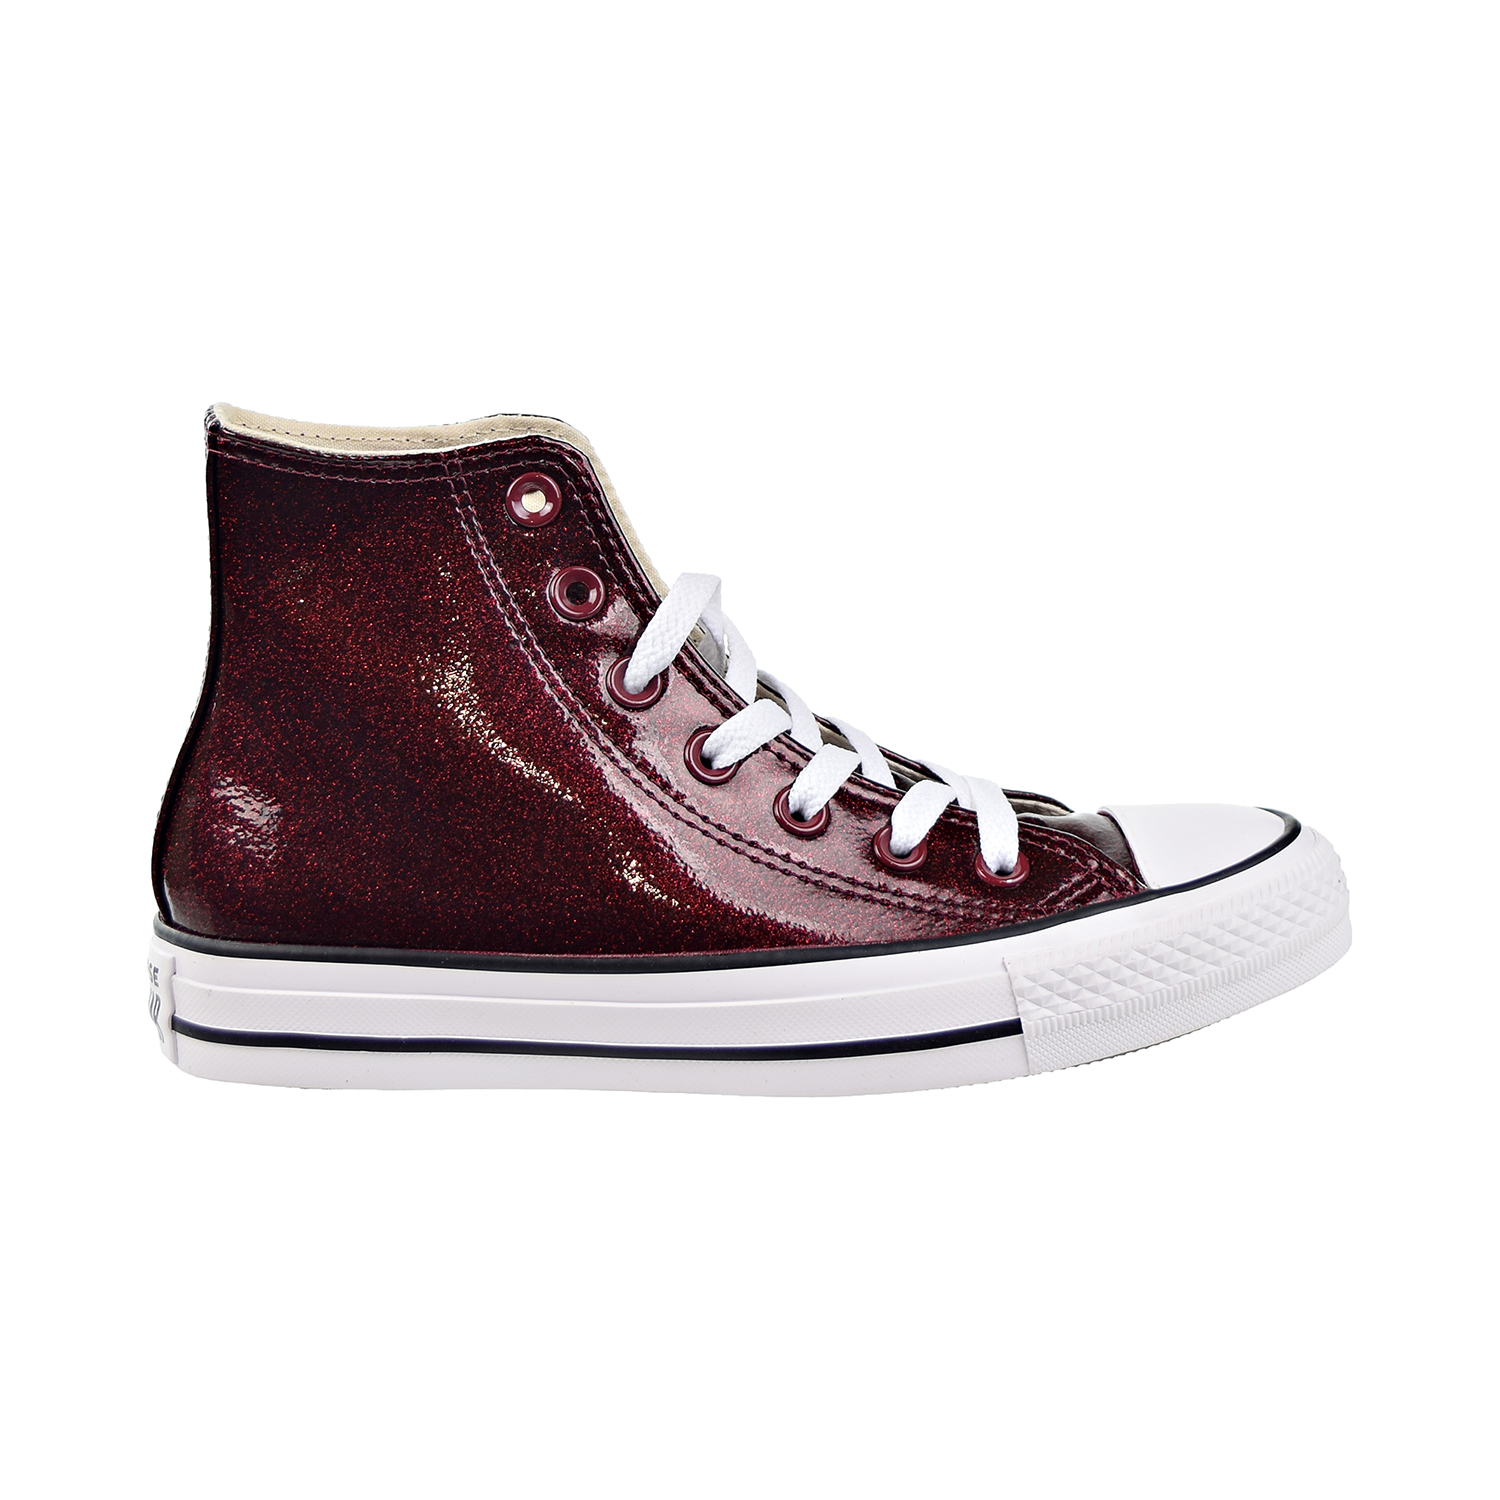 maroon converse women's shoes